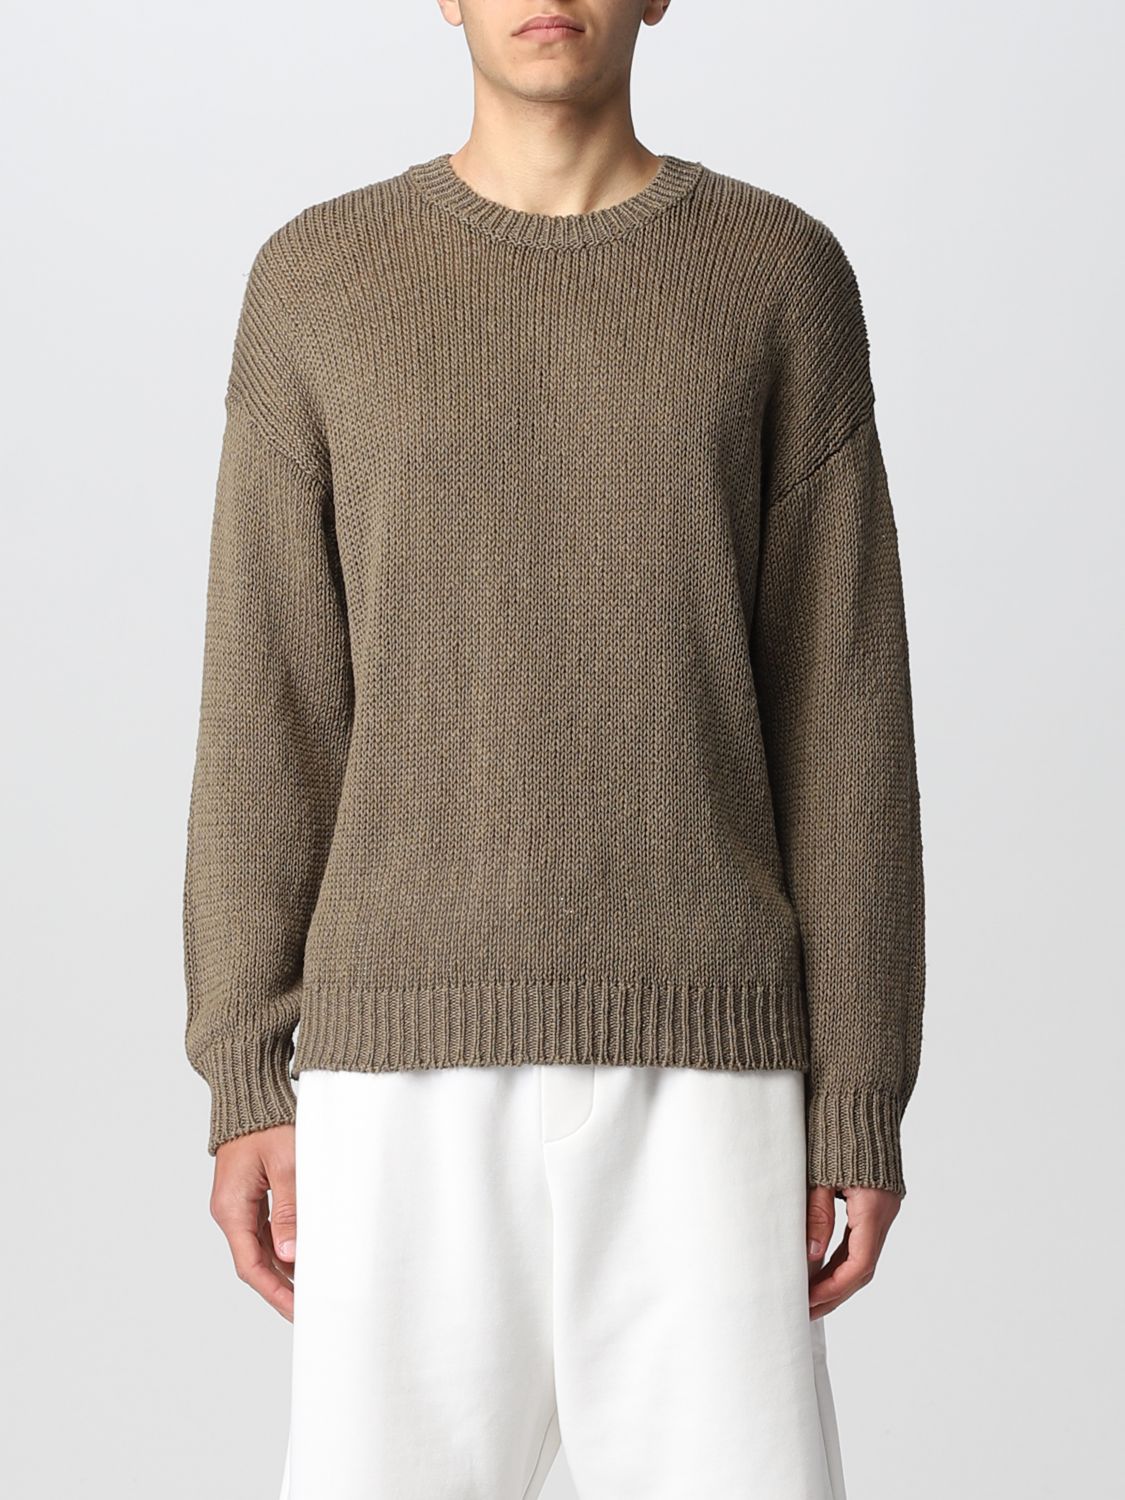 ROBERTO COLLINA: sweater for man - Green | Roberto Collina sweater ...